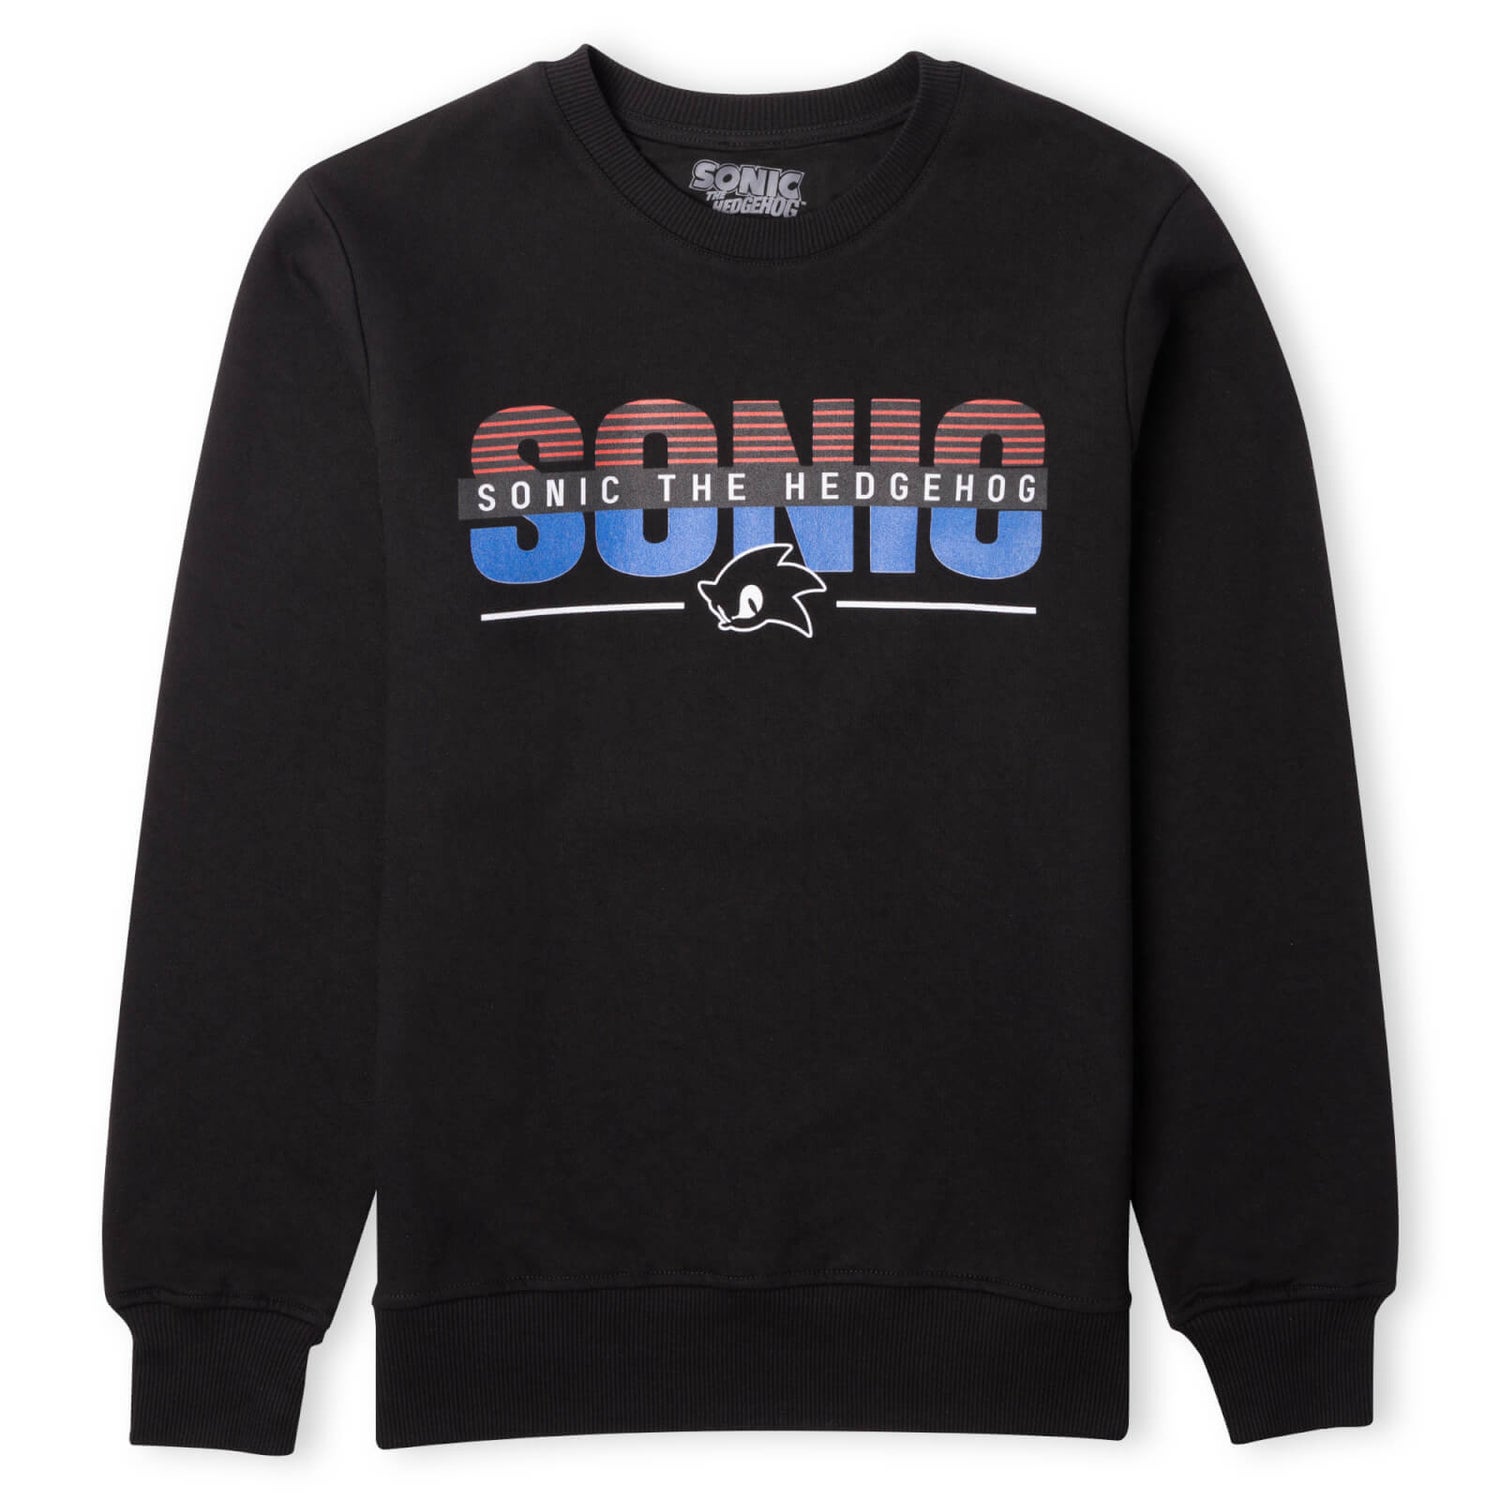 Sonic The Hedgehog Logo Sweatshirt - Black